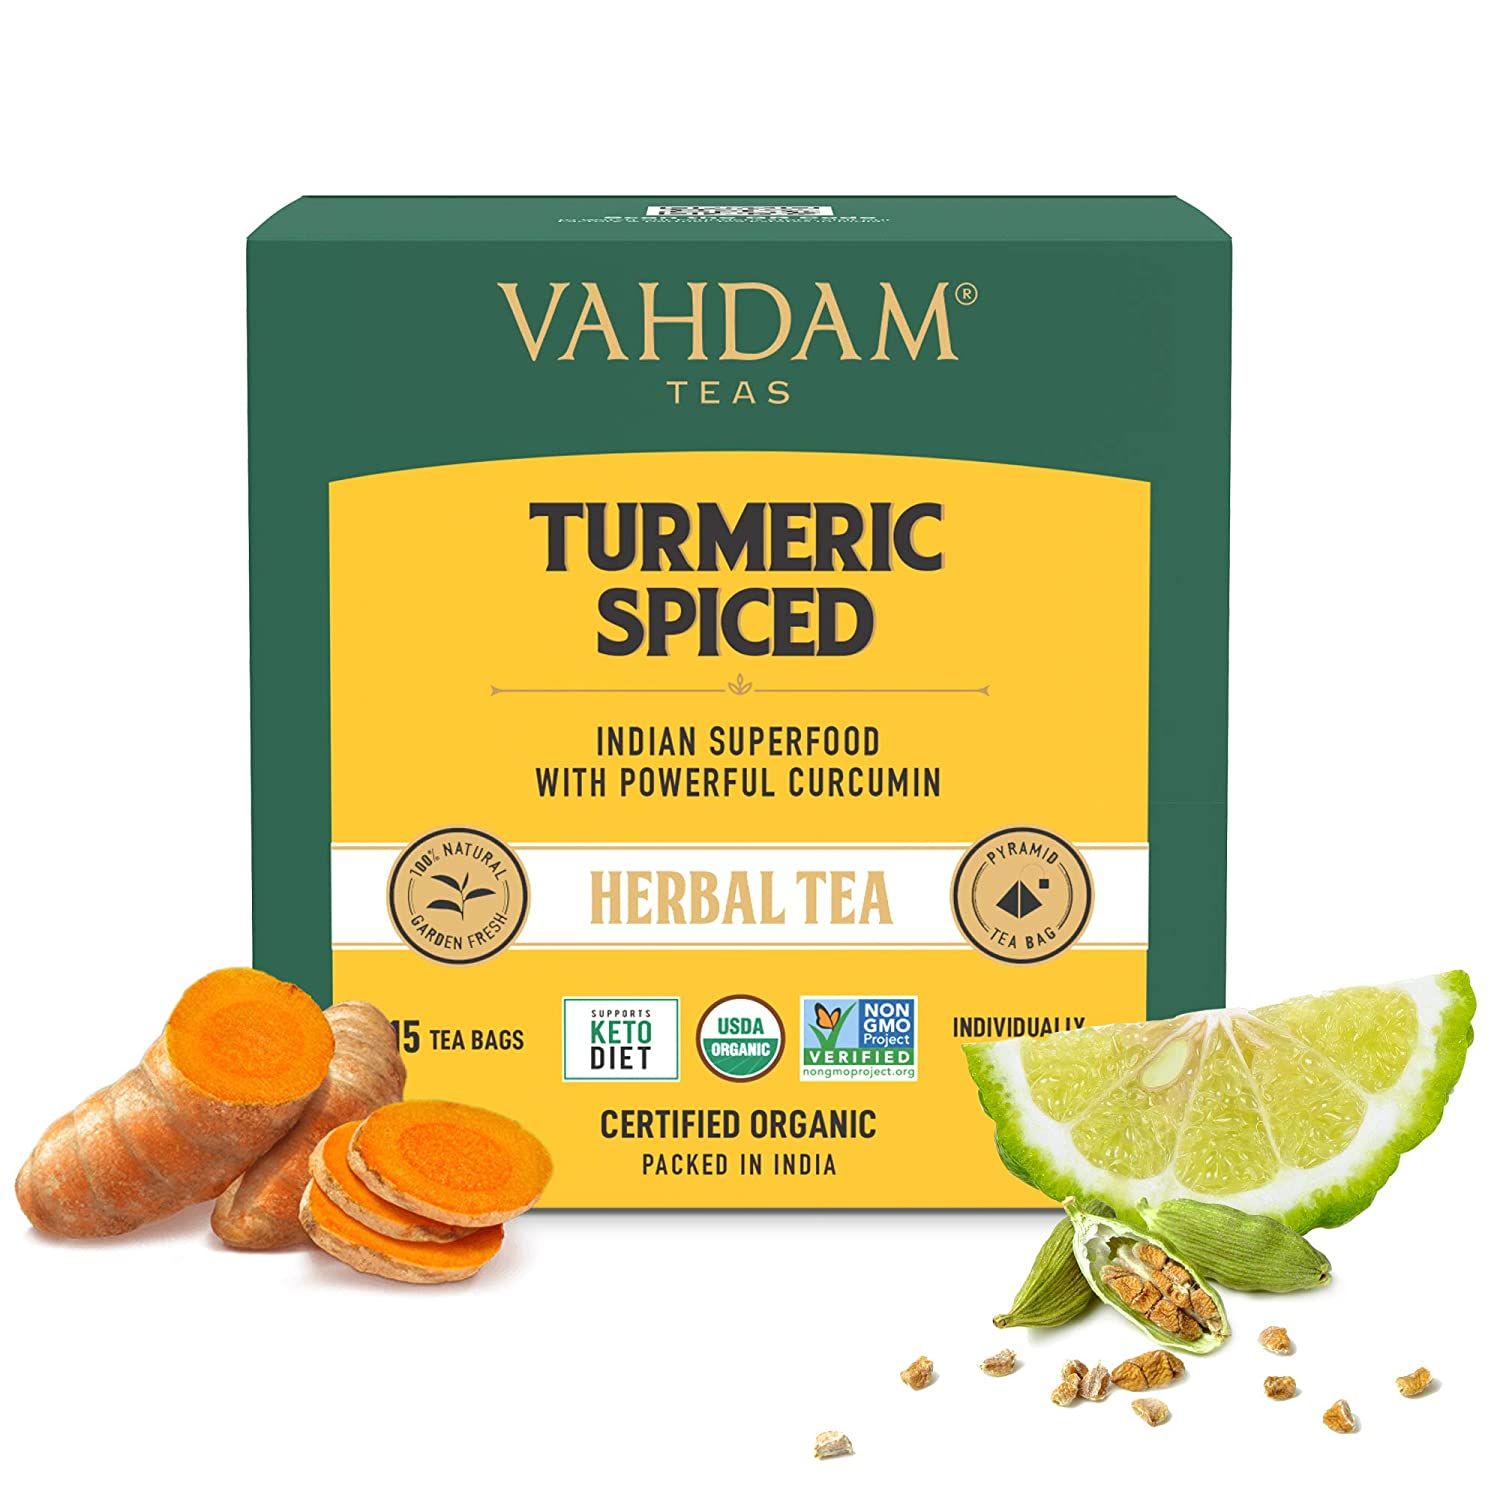 Vahdam Organic Spiced Turmeric Tea Image